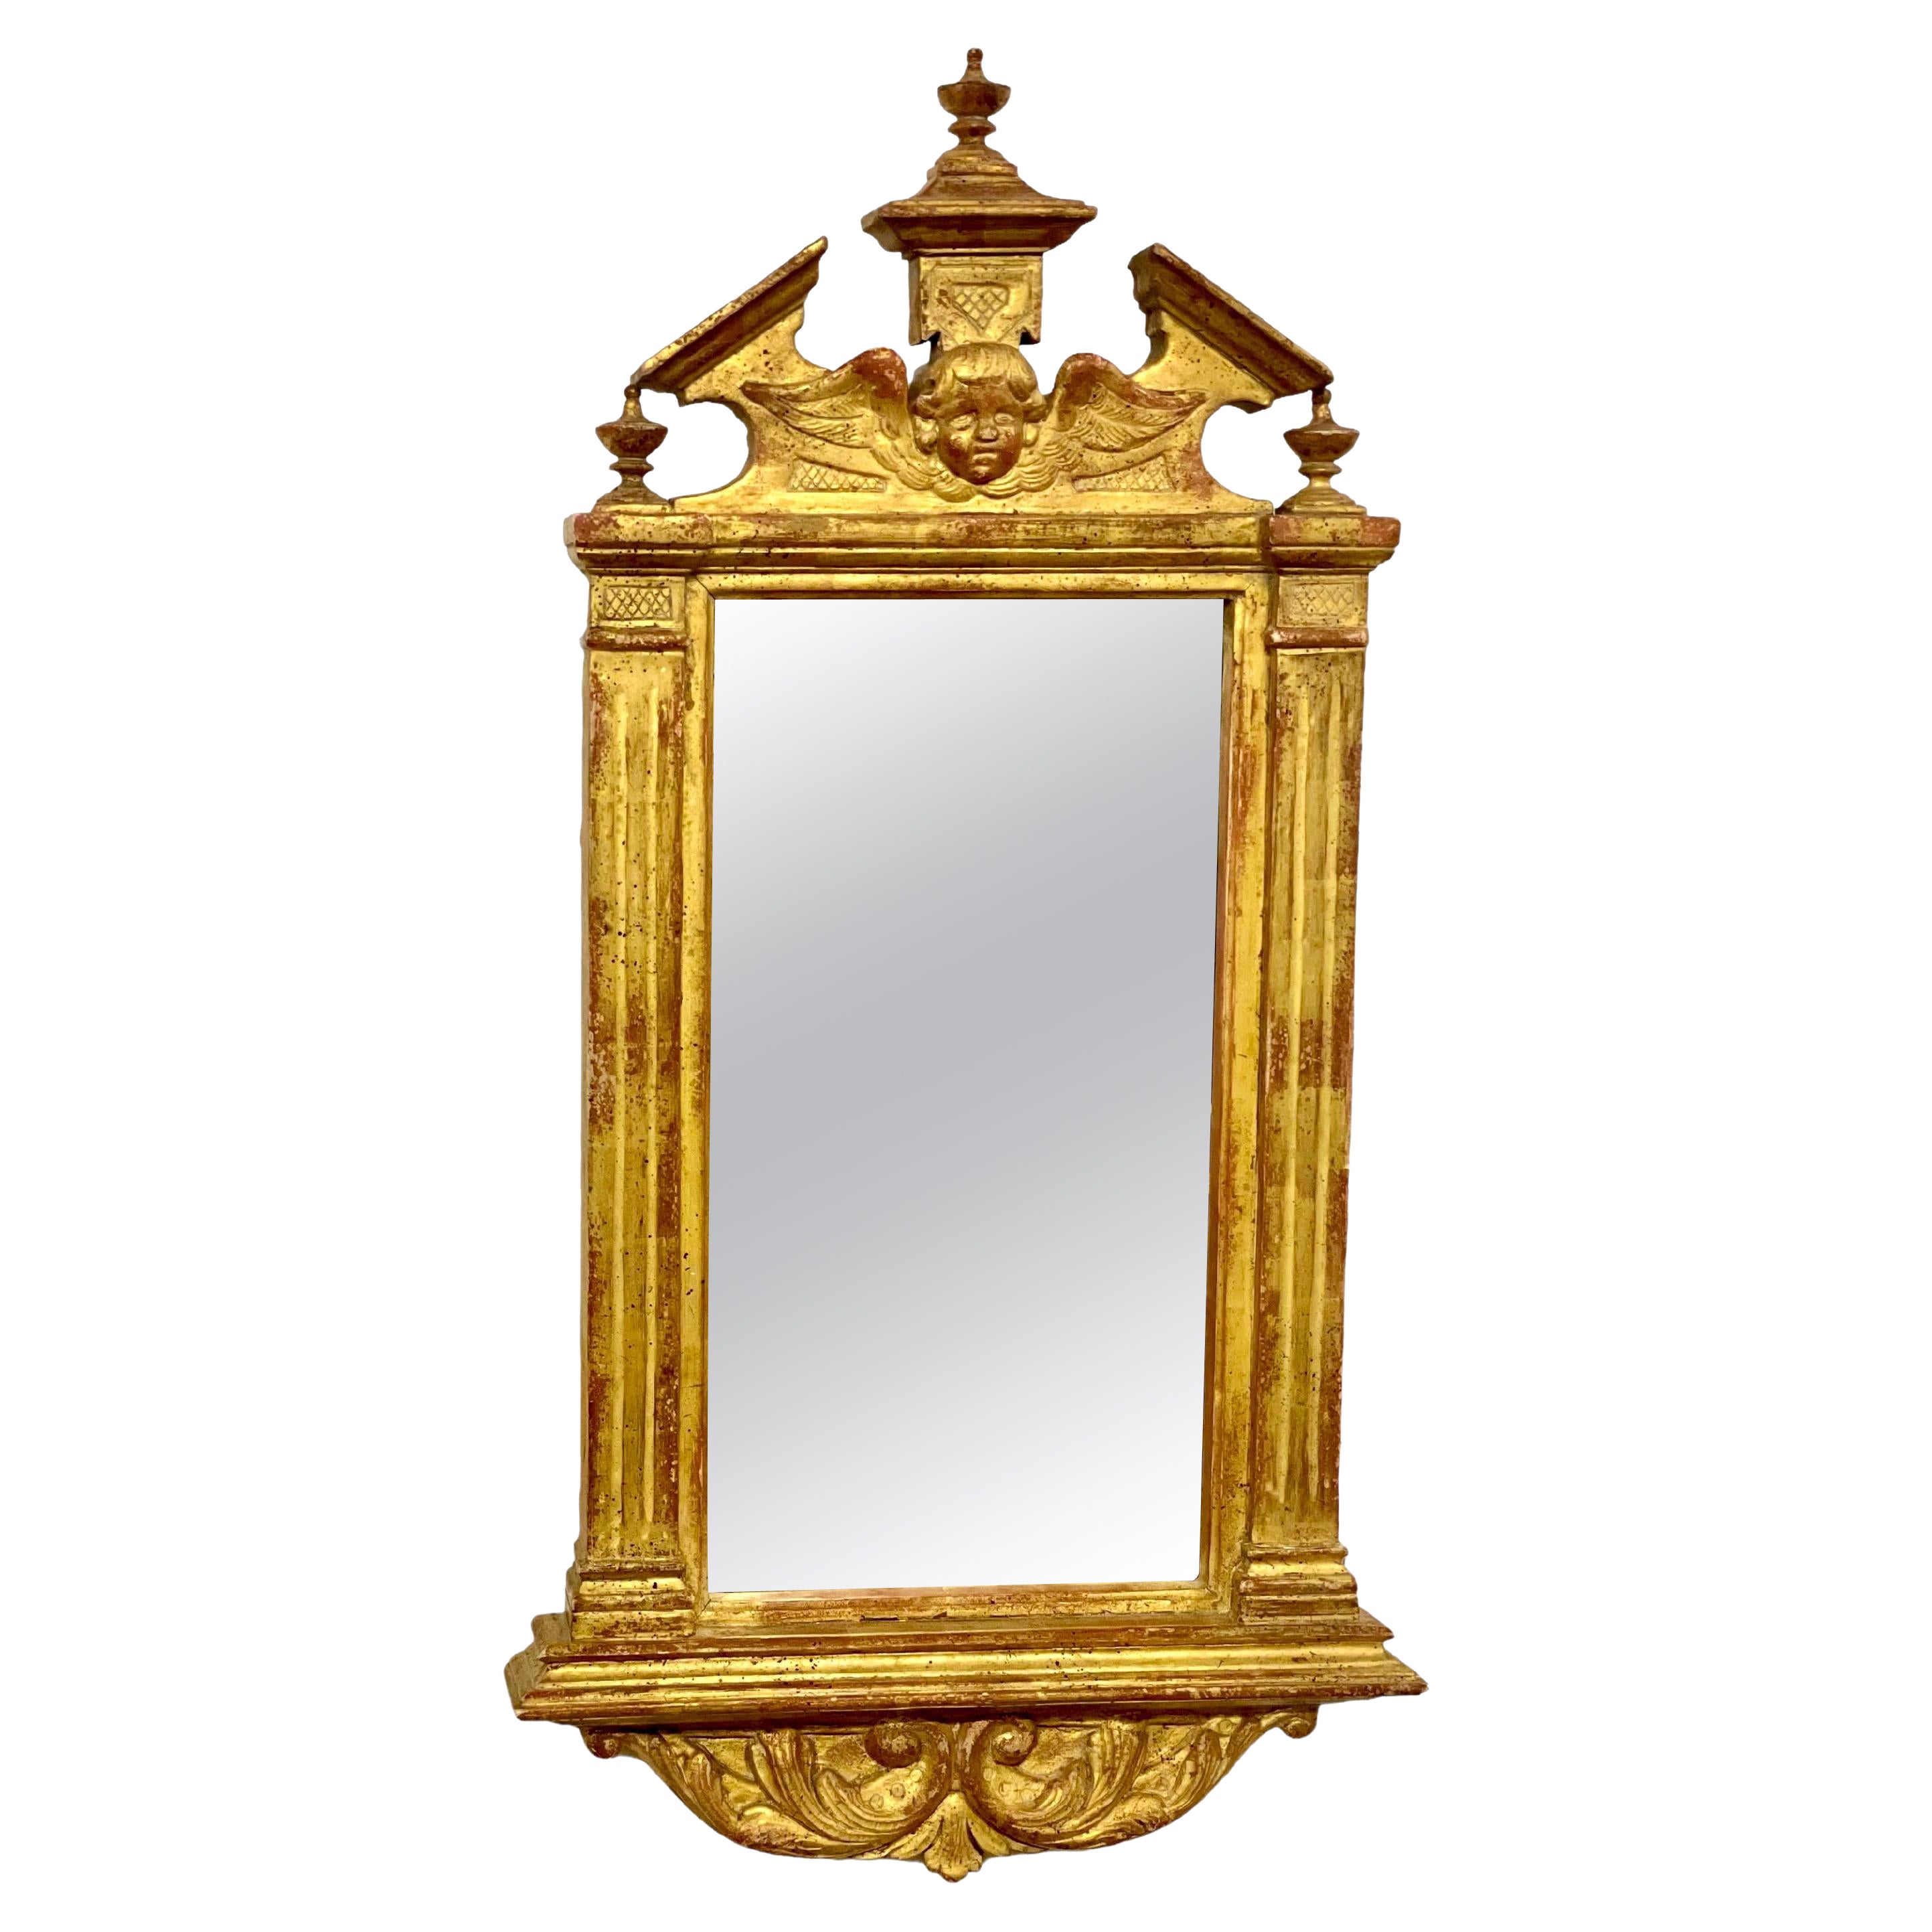 18th Century Italian Giltwood Wall Mirror For Sale